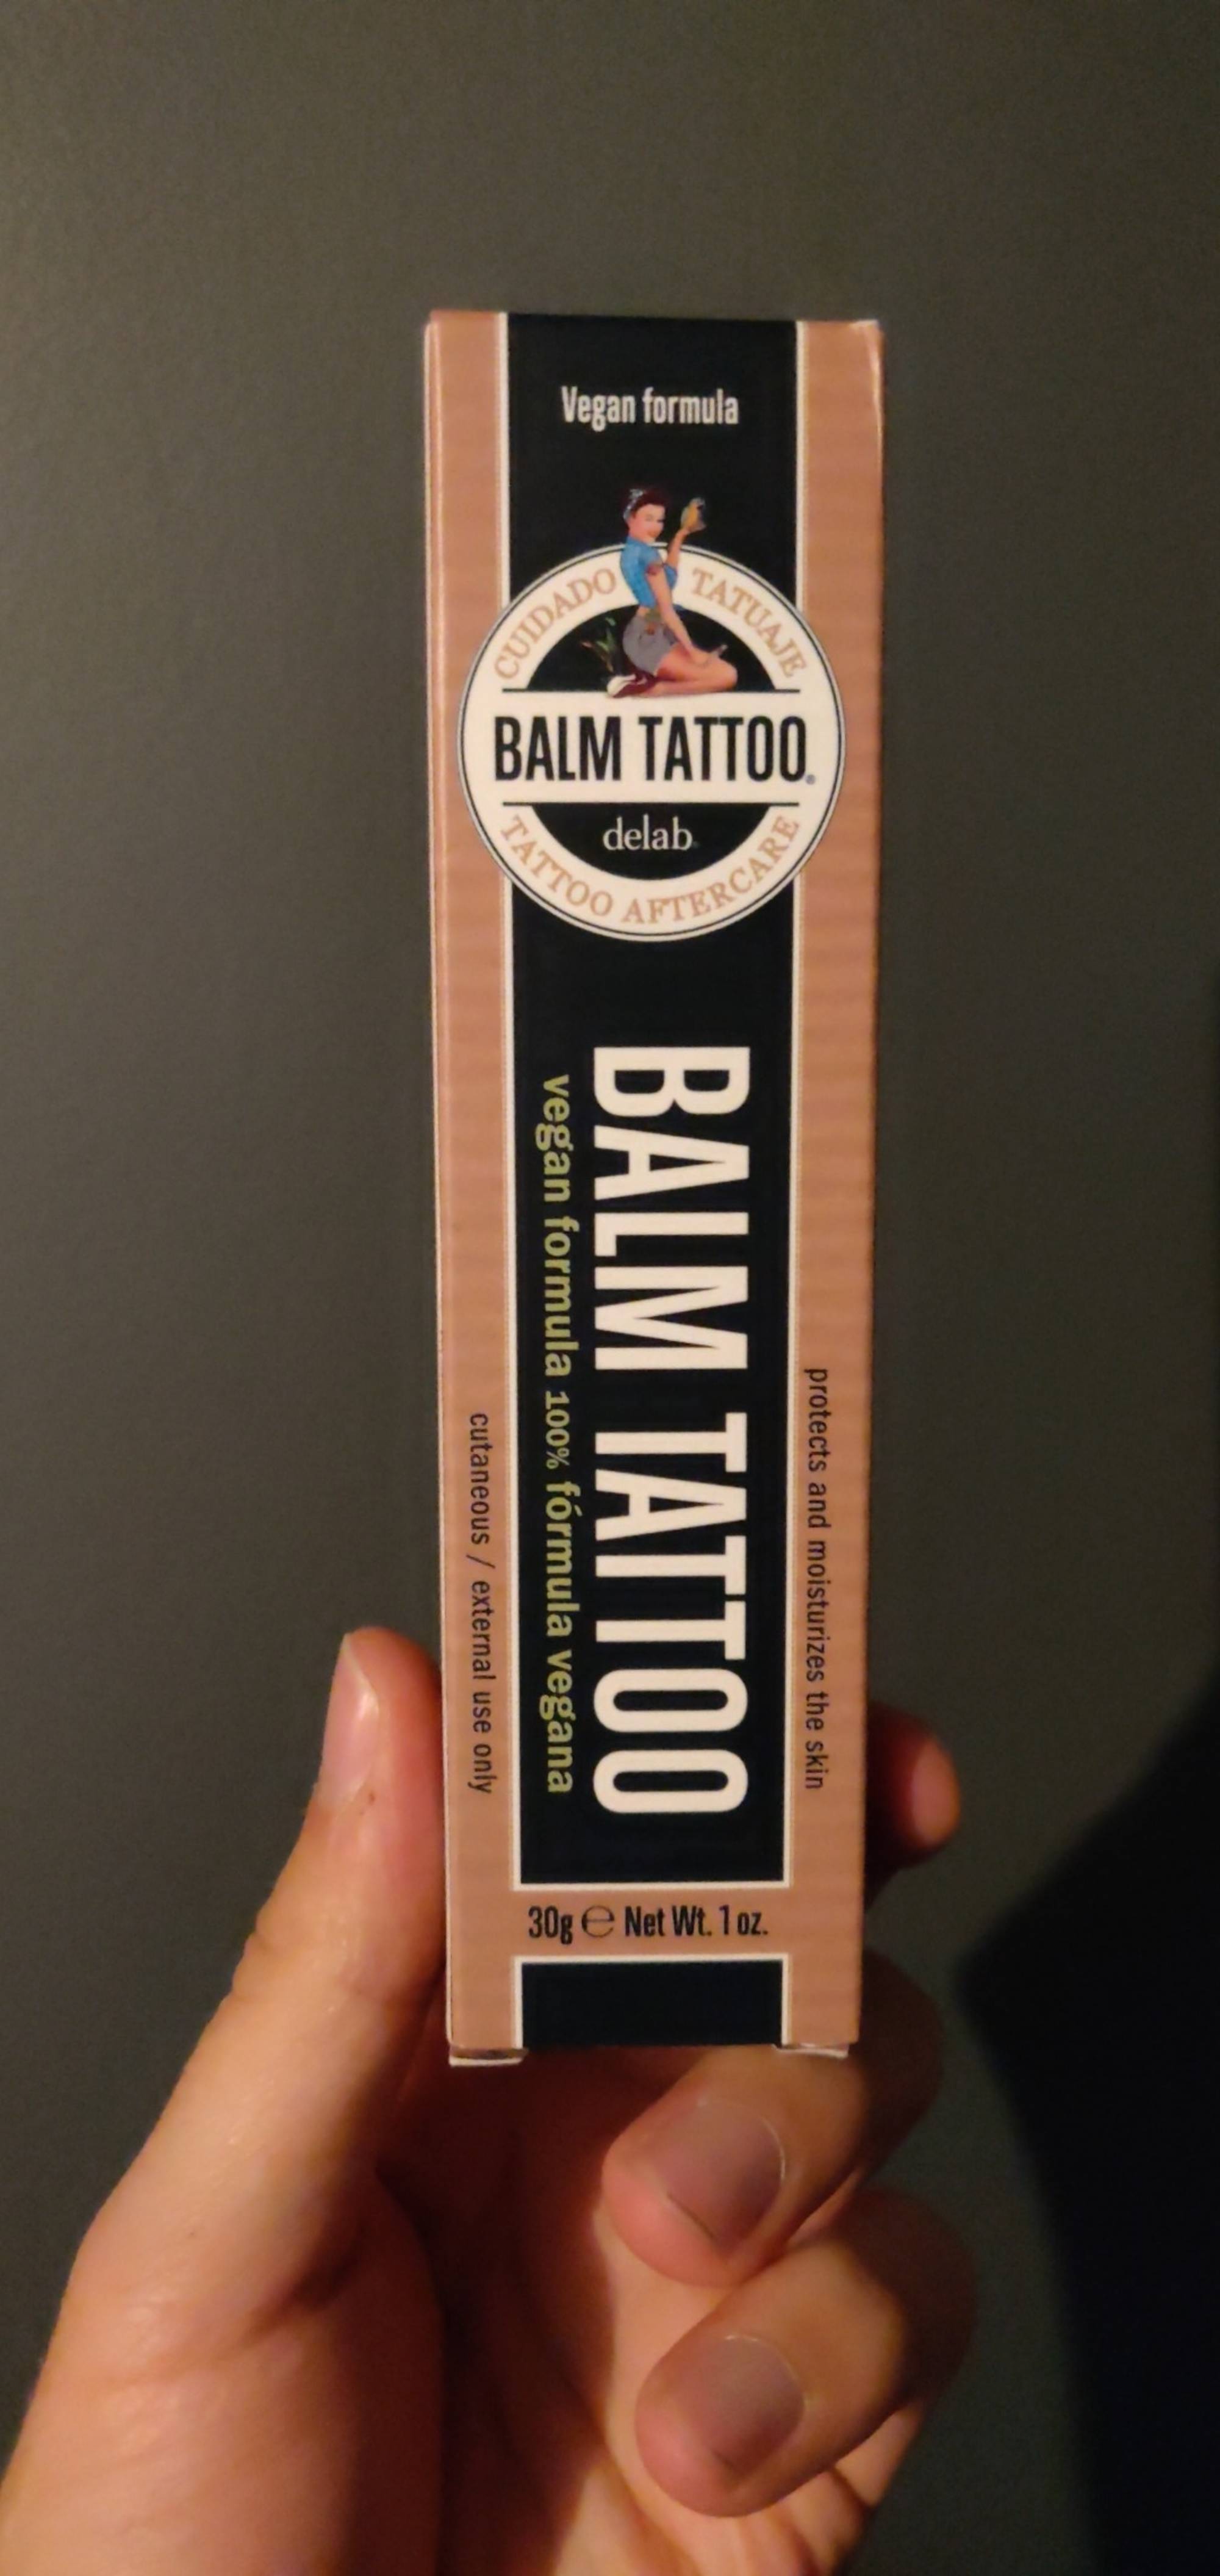 BALM TATTOO - Vegan formula - Balm tatoo